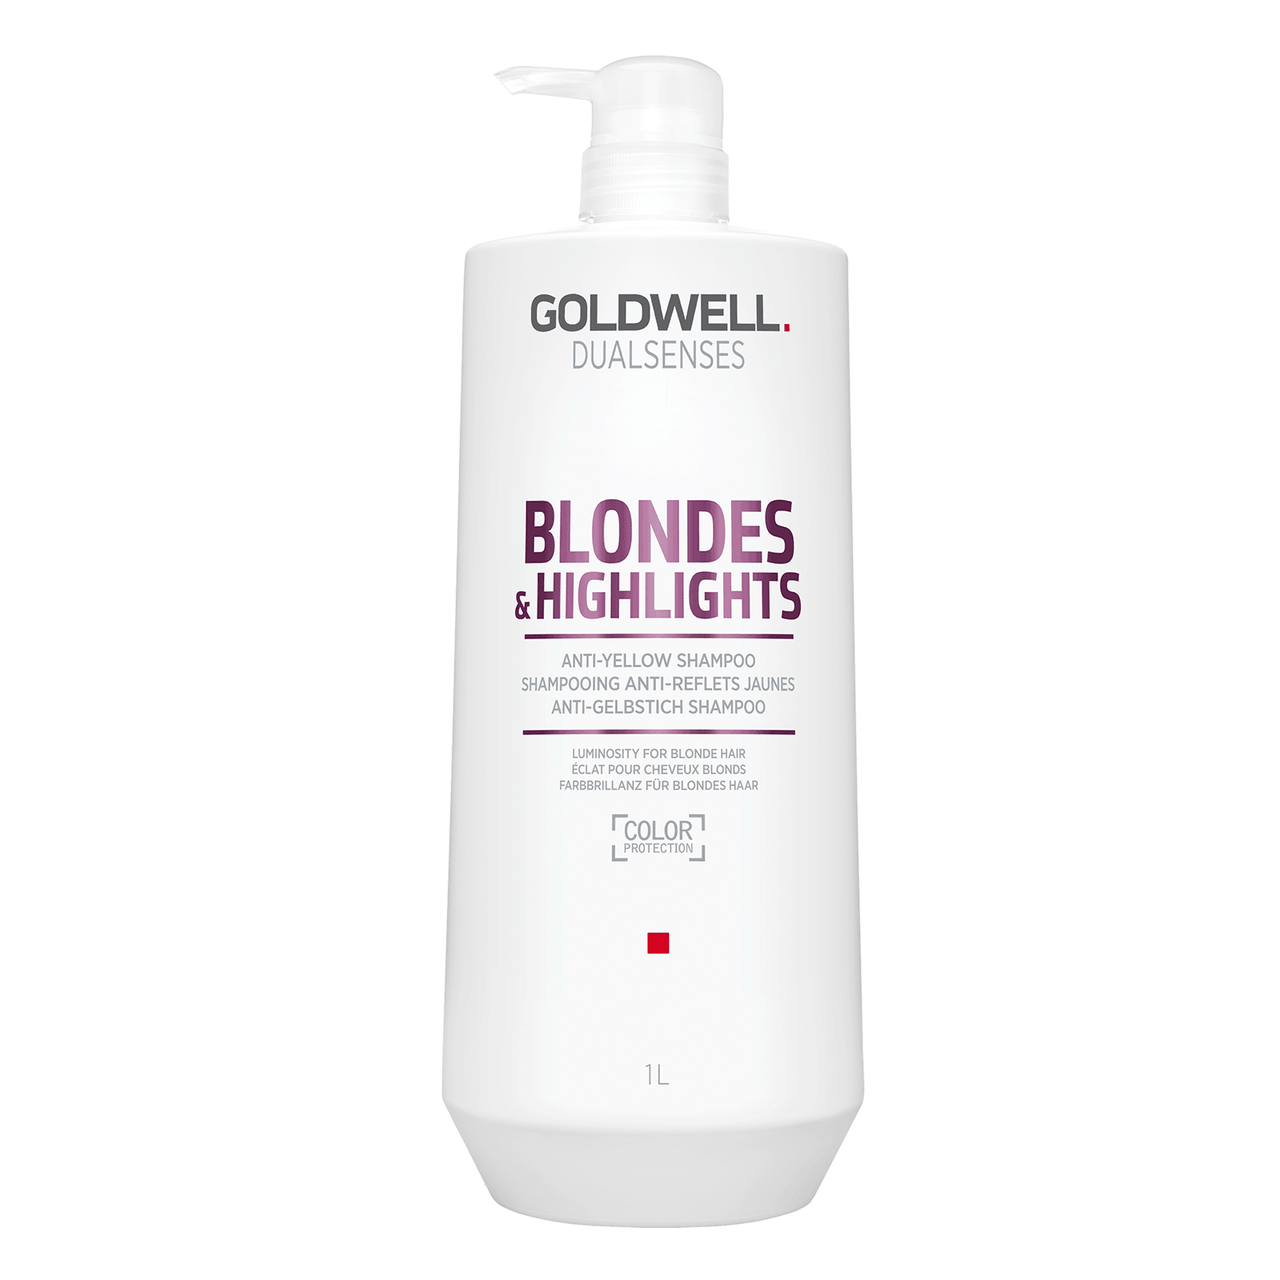 Goldwell  Dualsenses - Blonde & Highlights Anti-Yellow Shampoo 1 Liter